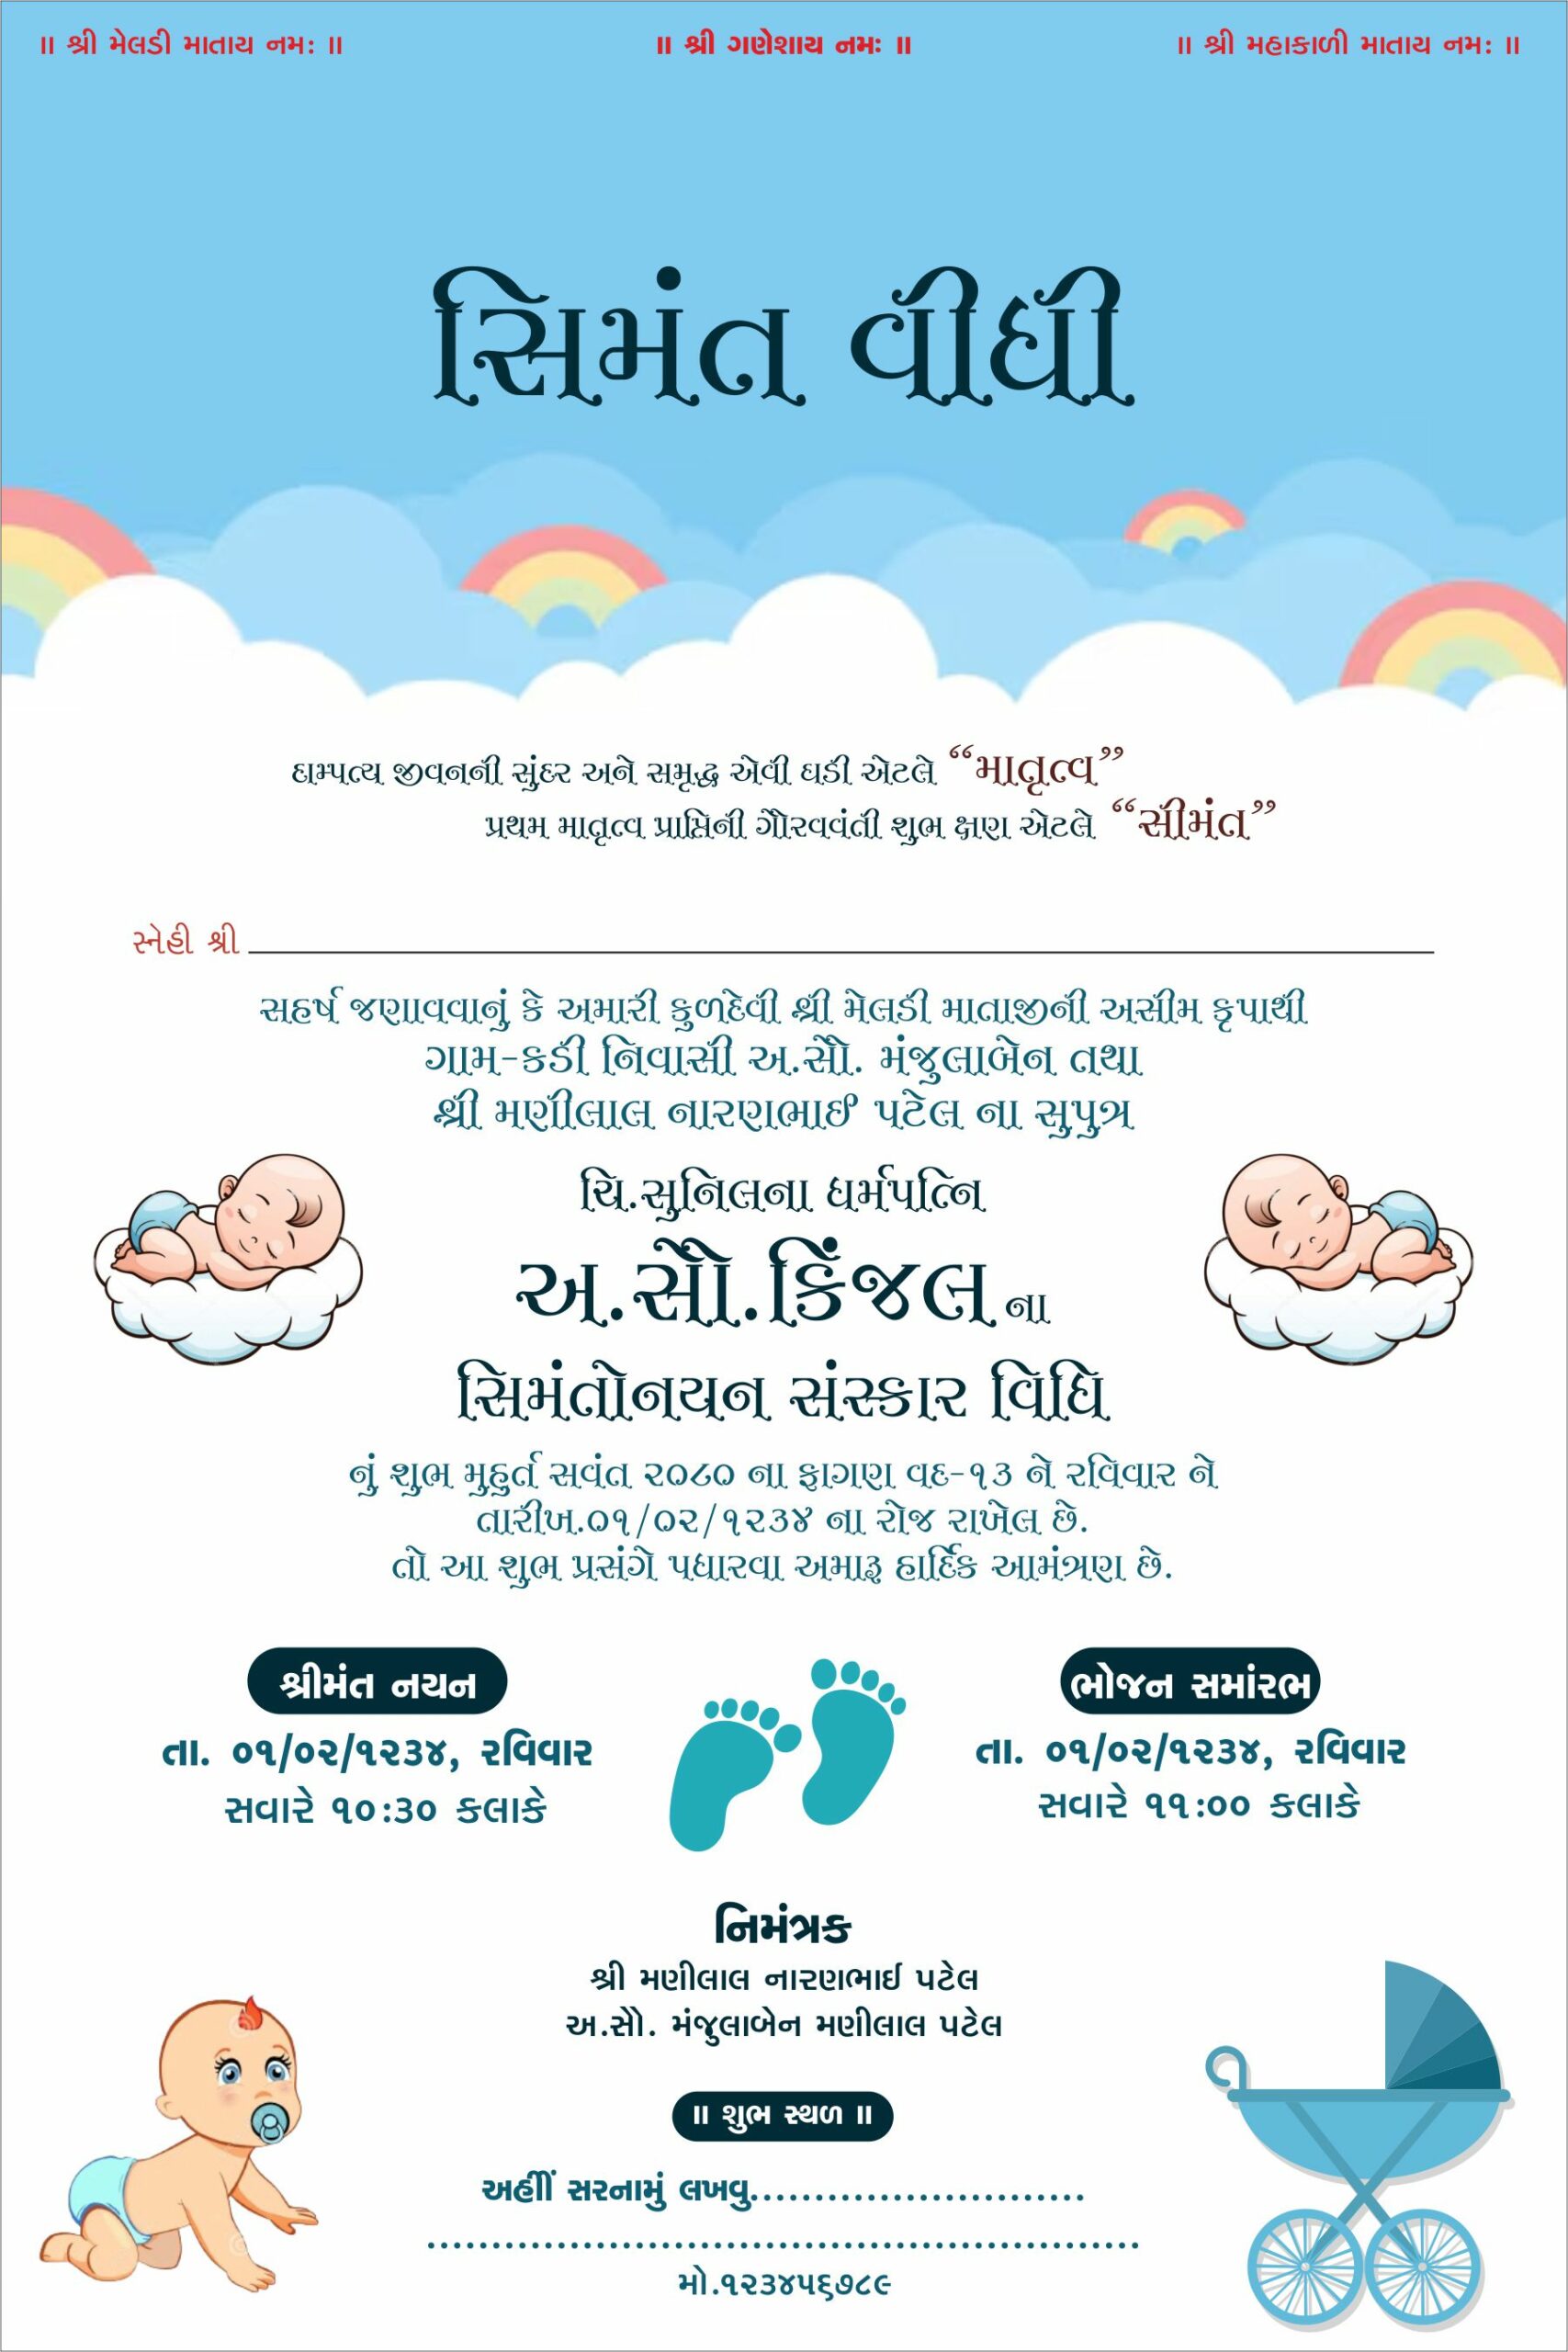 Baby Shower Invitation Card